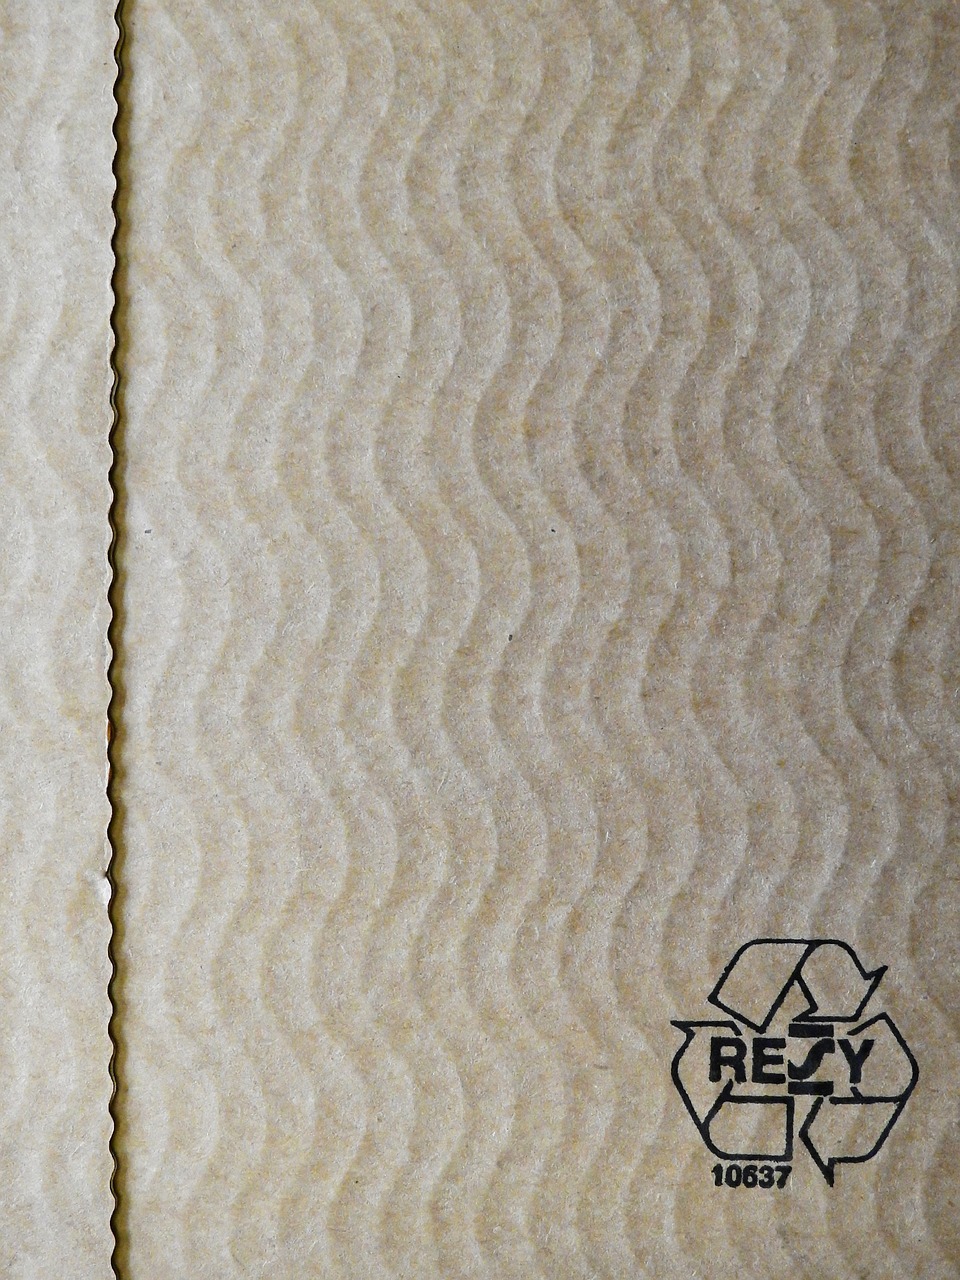 cardboard corrugated board packaging free photo